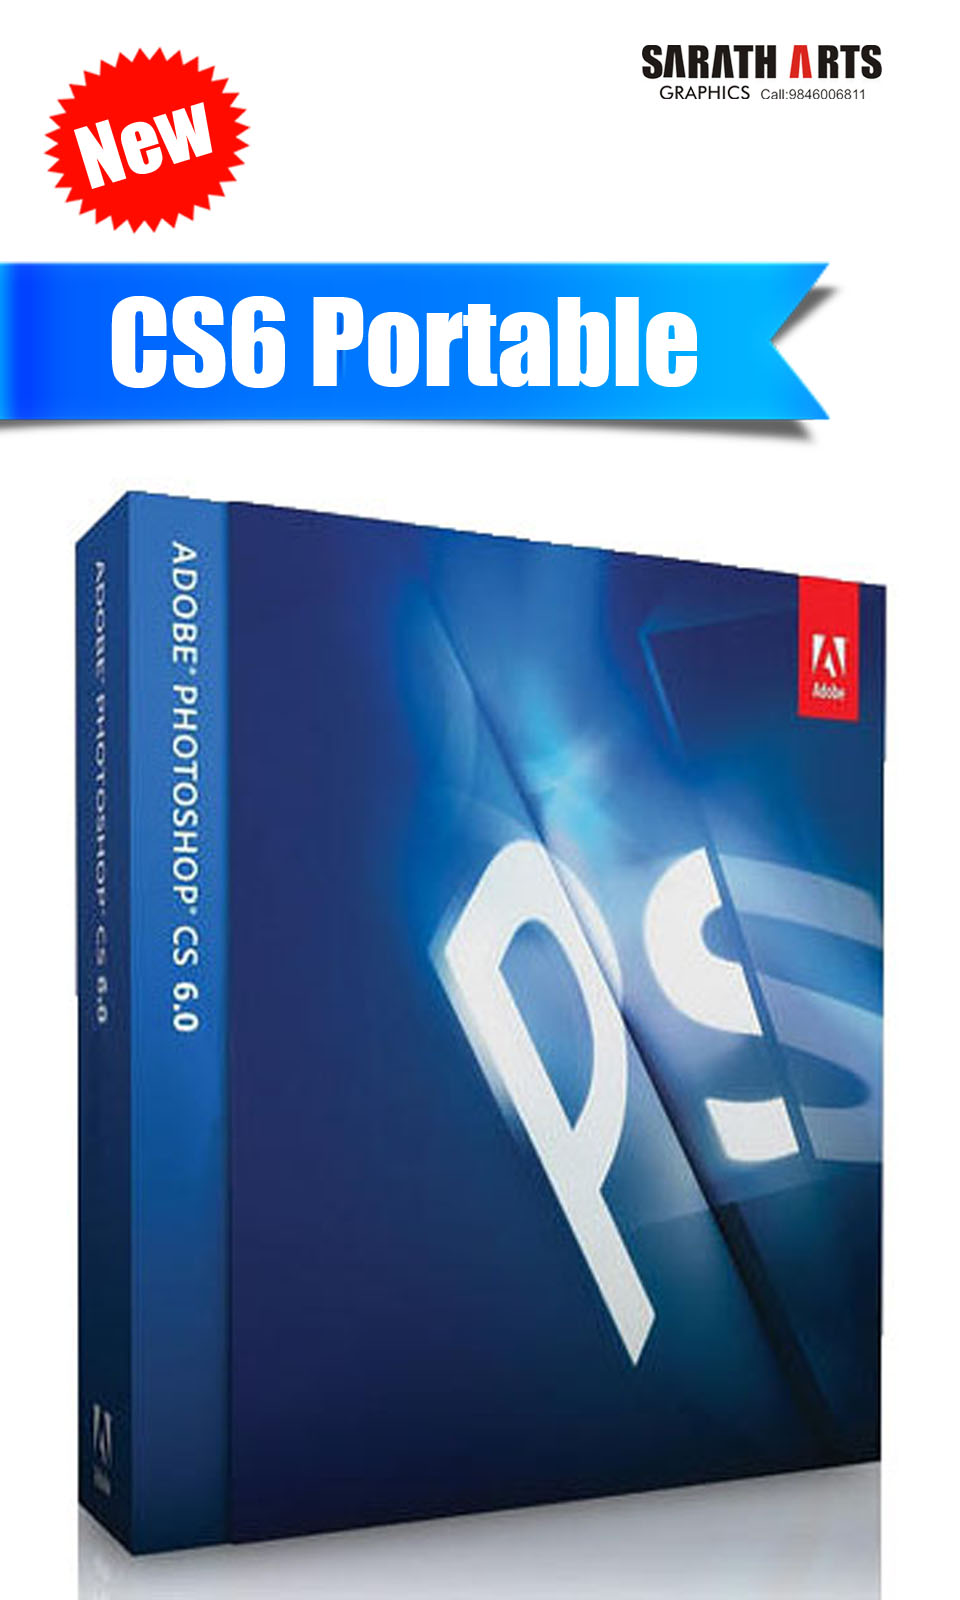 photoshop cs6 portable 64 bit